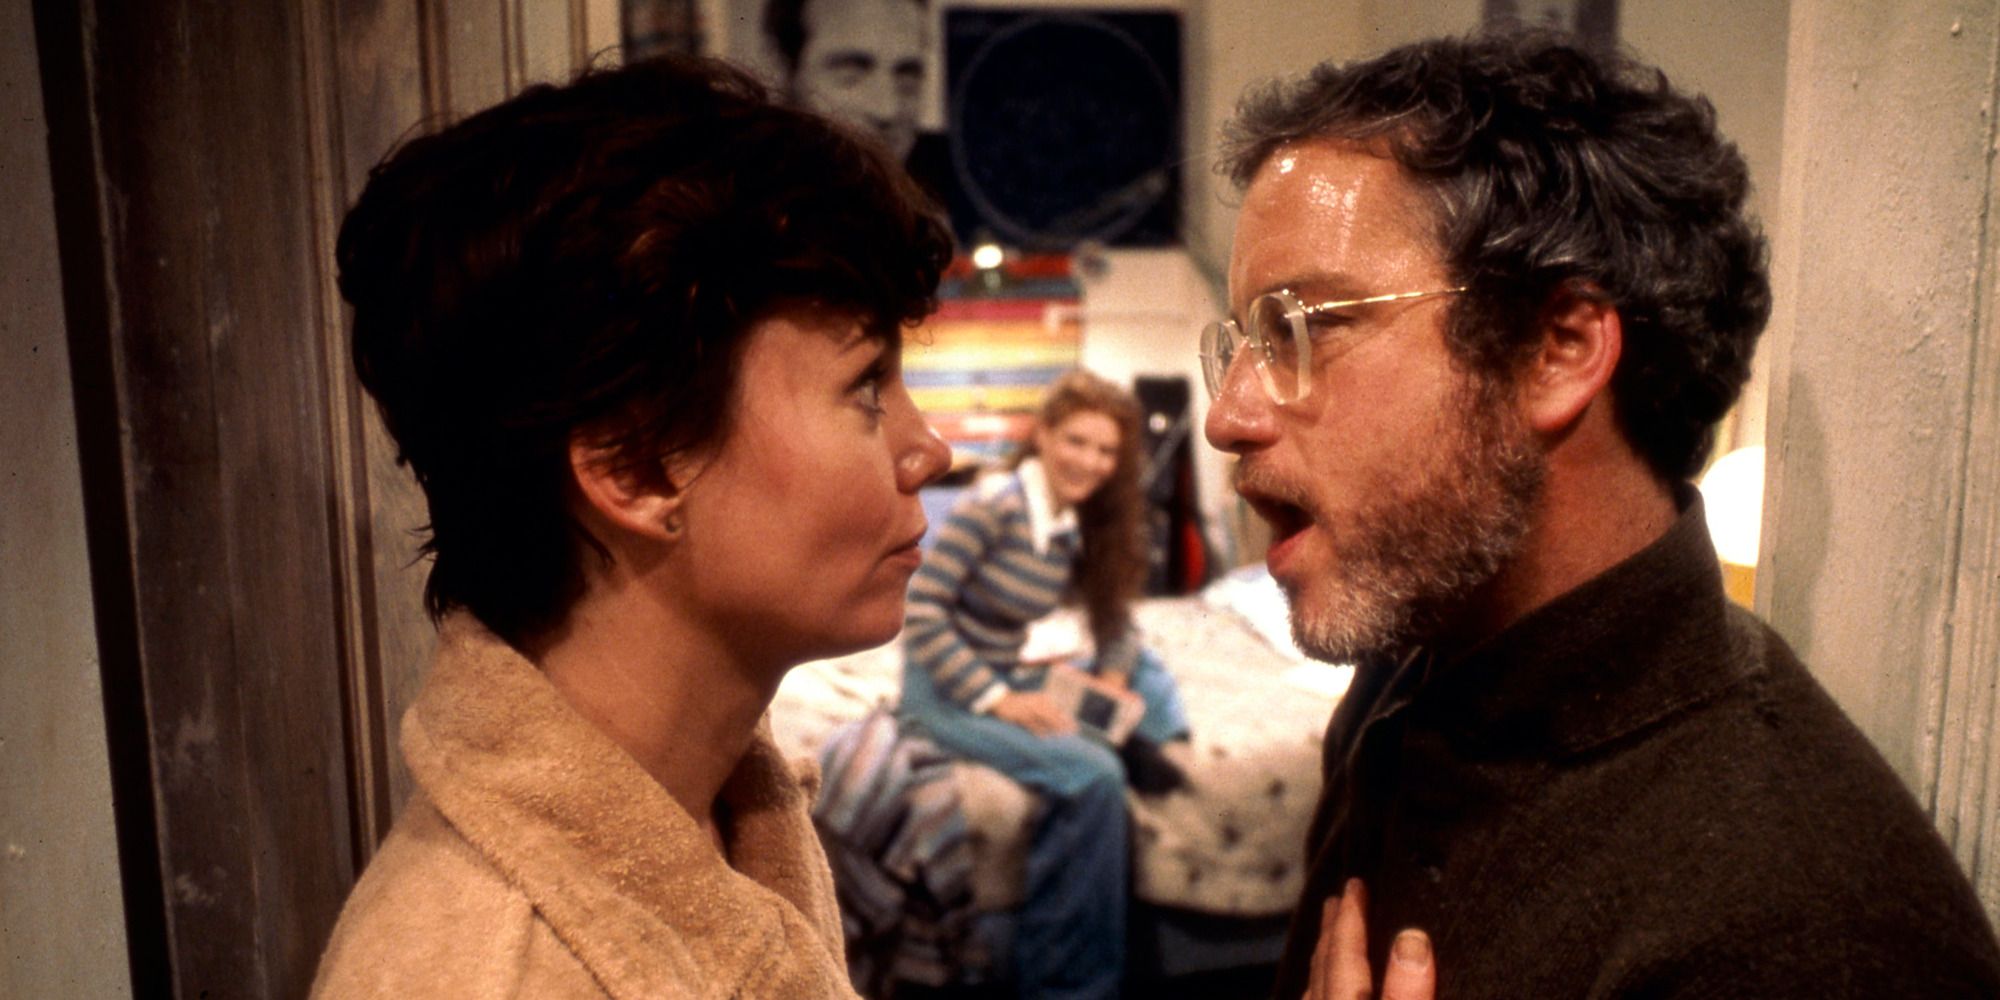 a man and woman speaking in front of a girl's bedroom, door open